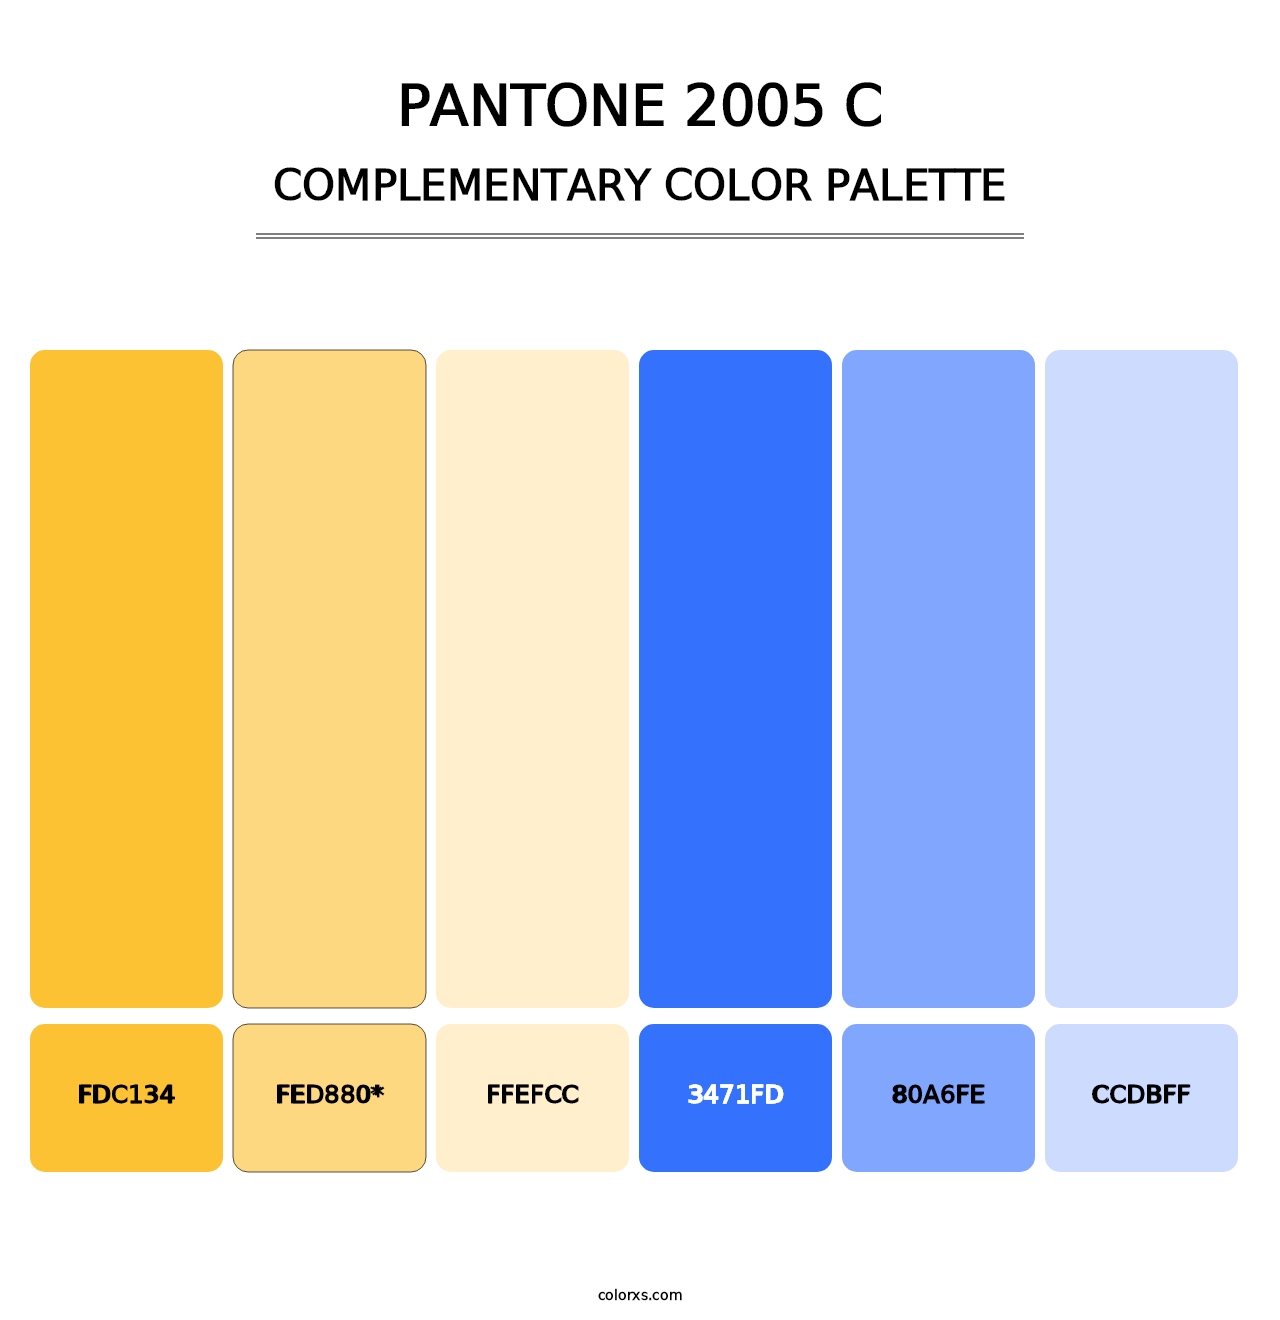 PANTONE 2005 C - Complementary Color Palette